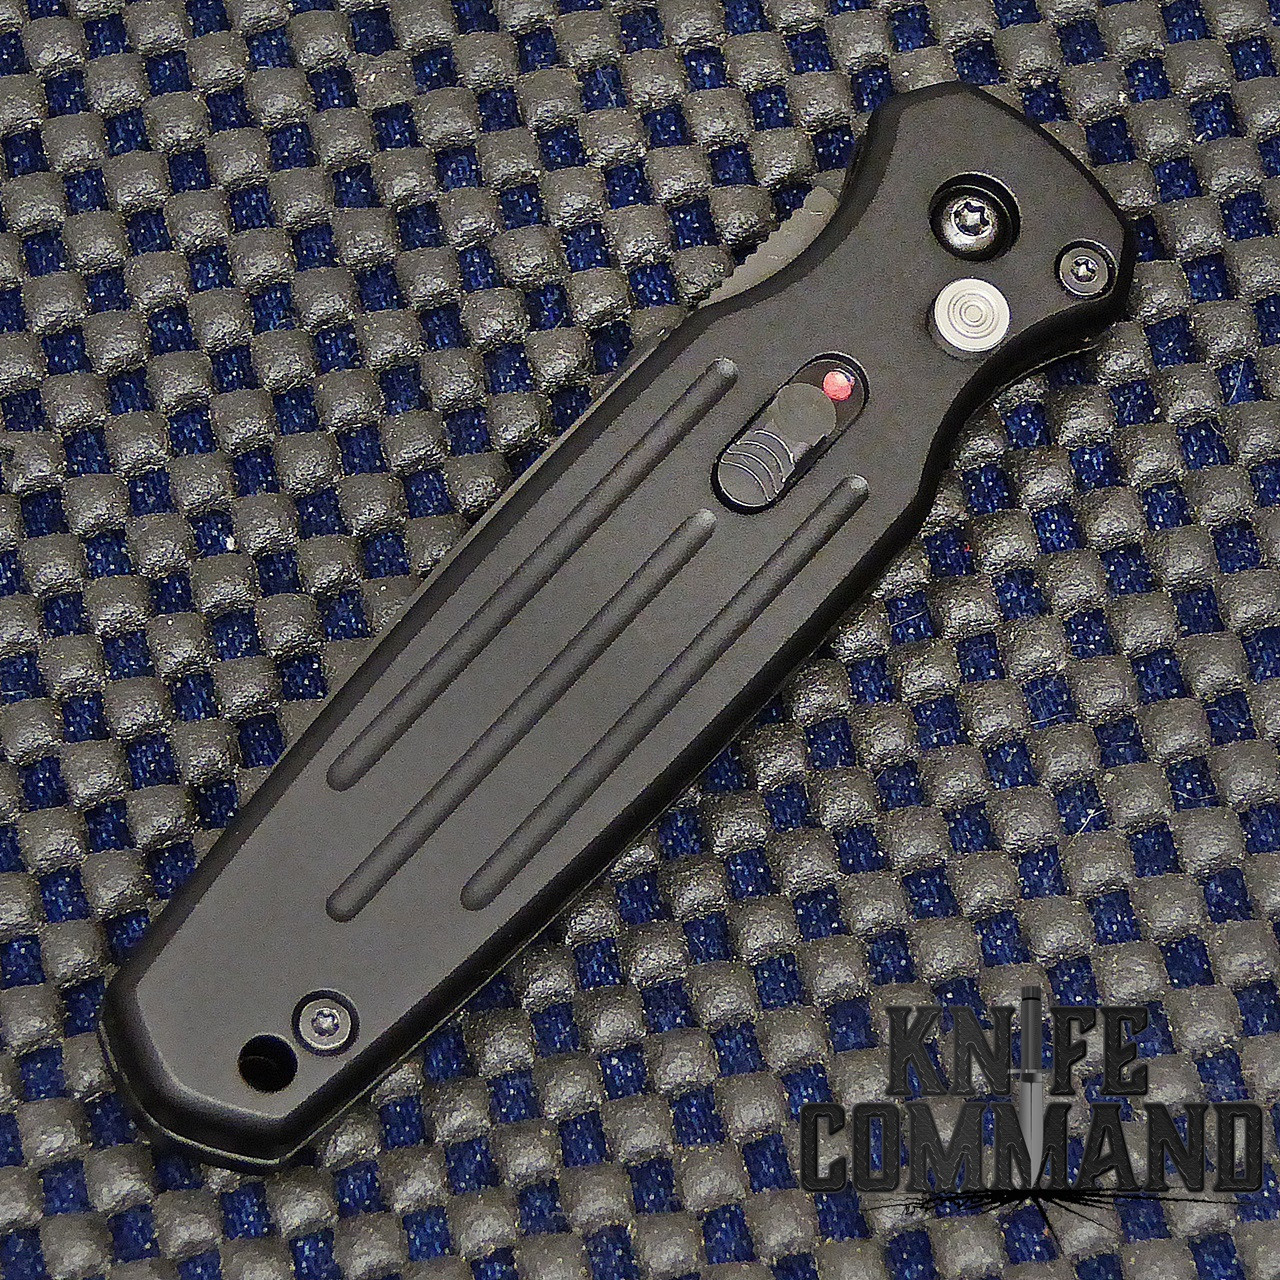 Gerber Mini Covert Automatic Knife, Black, CPM-S30V, 30-000244.  Safety lock.